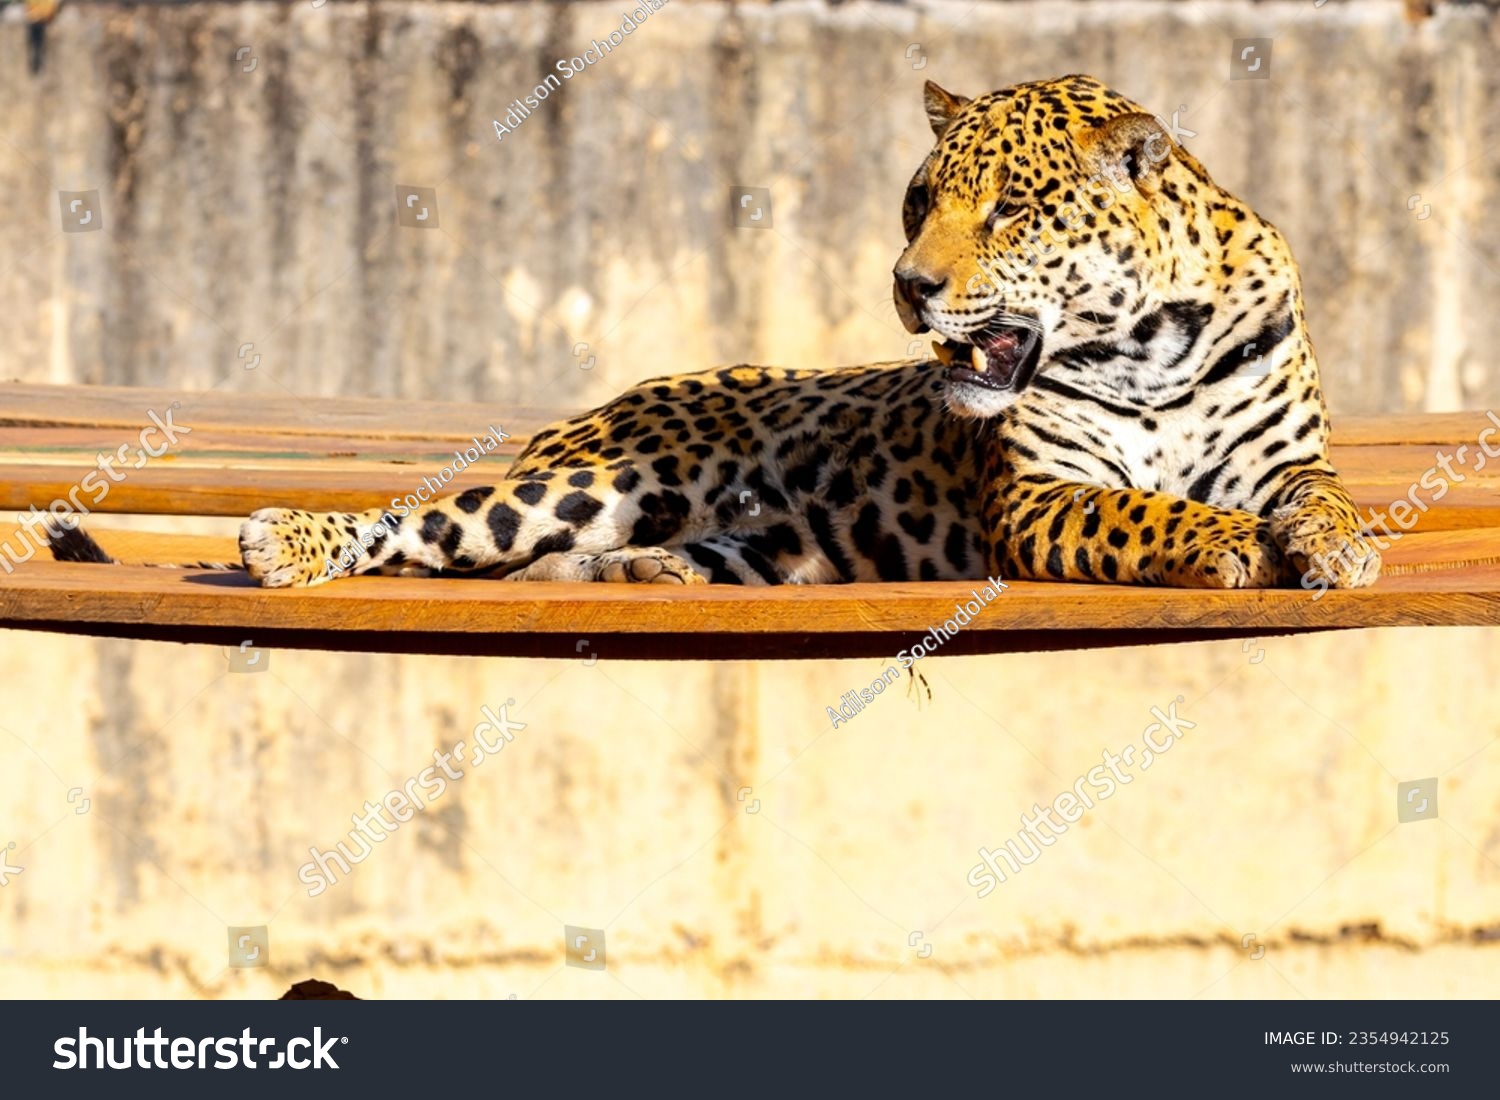 Magnificent jaguar portrait in selective focus. Largest wild cat in the Americas #2354942125